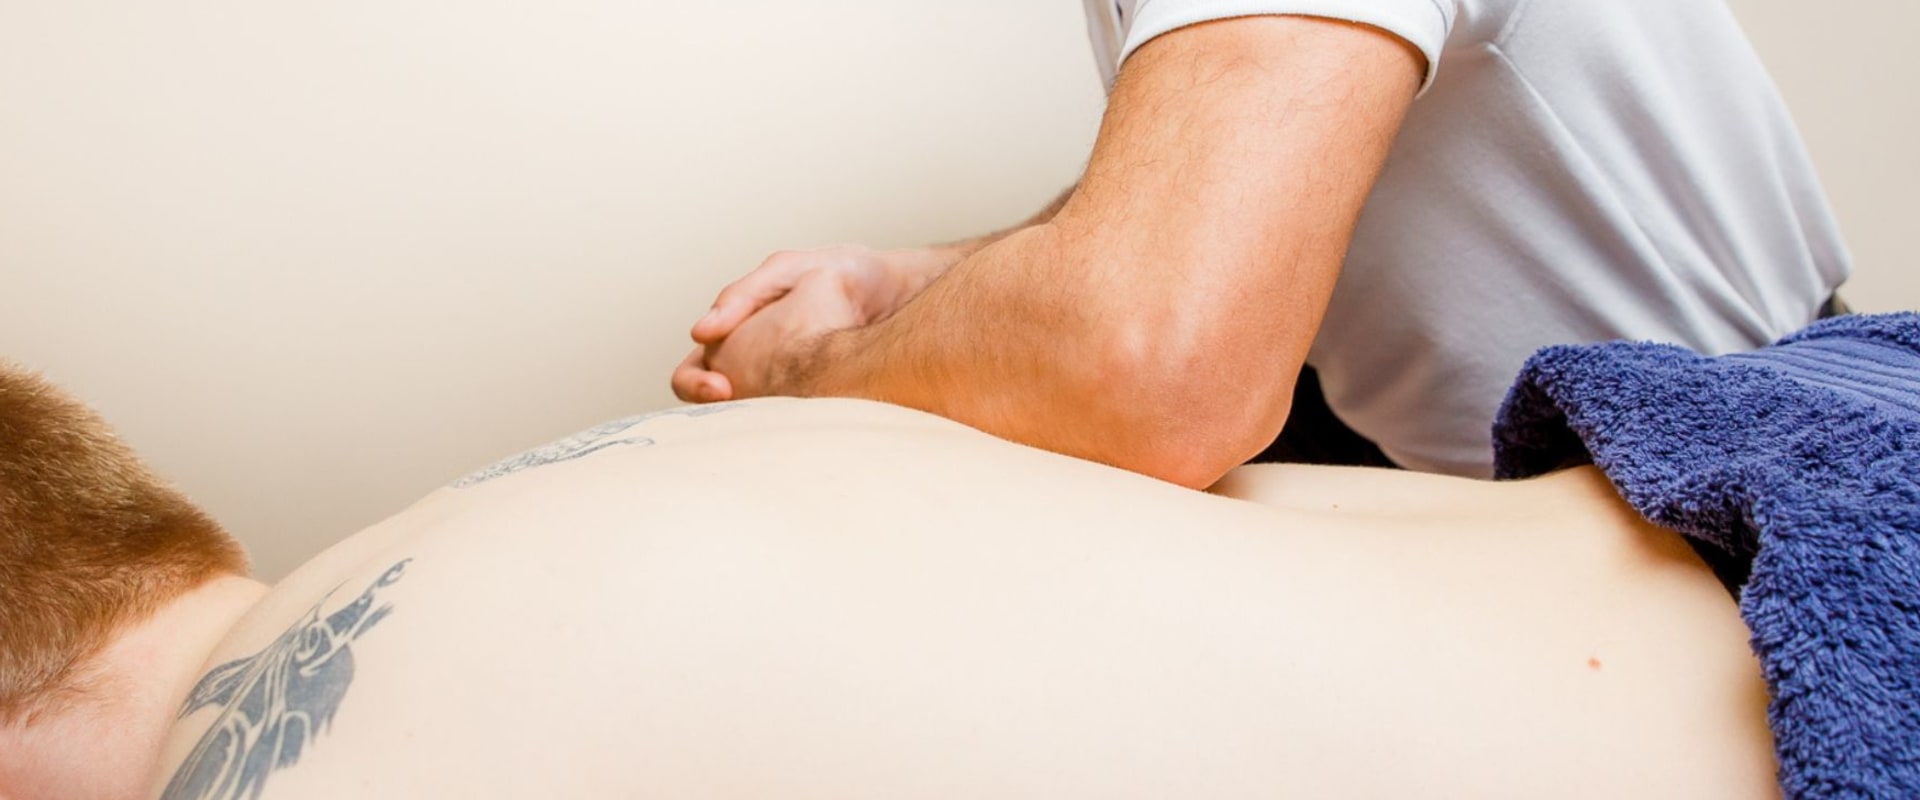 How long should you wait between deep tissue massages?